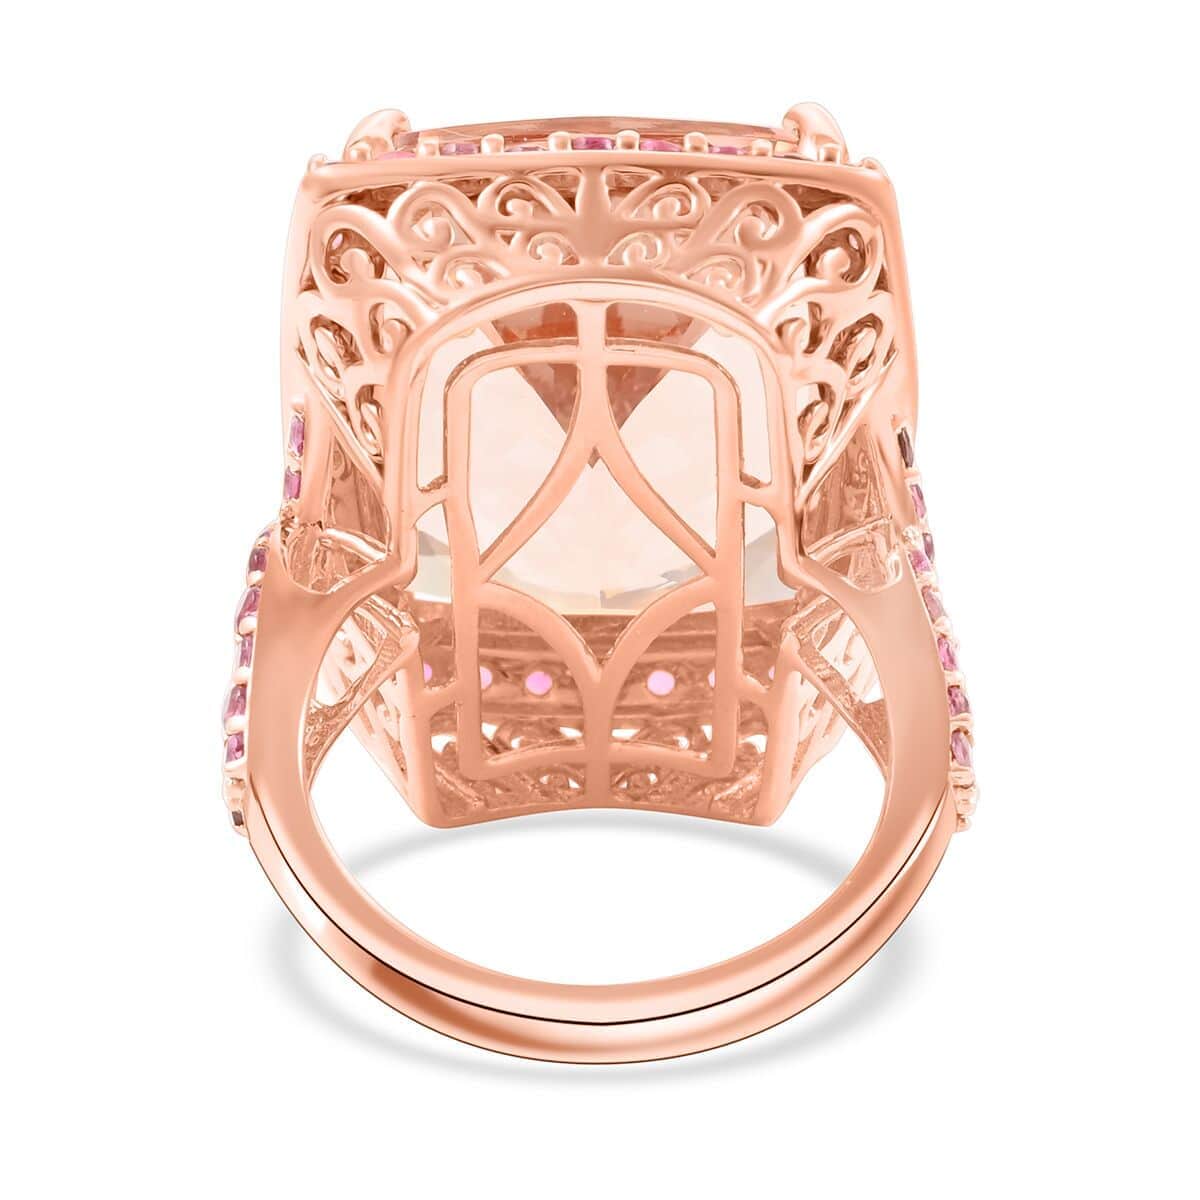 Luxoro 14K Rose Gold Marropino Morganite and Morro Redondo Pink Tourmaline Ring (Size 7.0) 21.80 ctw image number 4